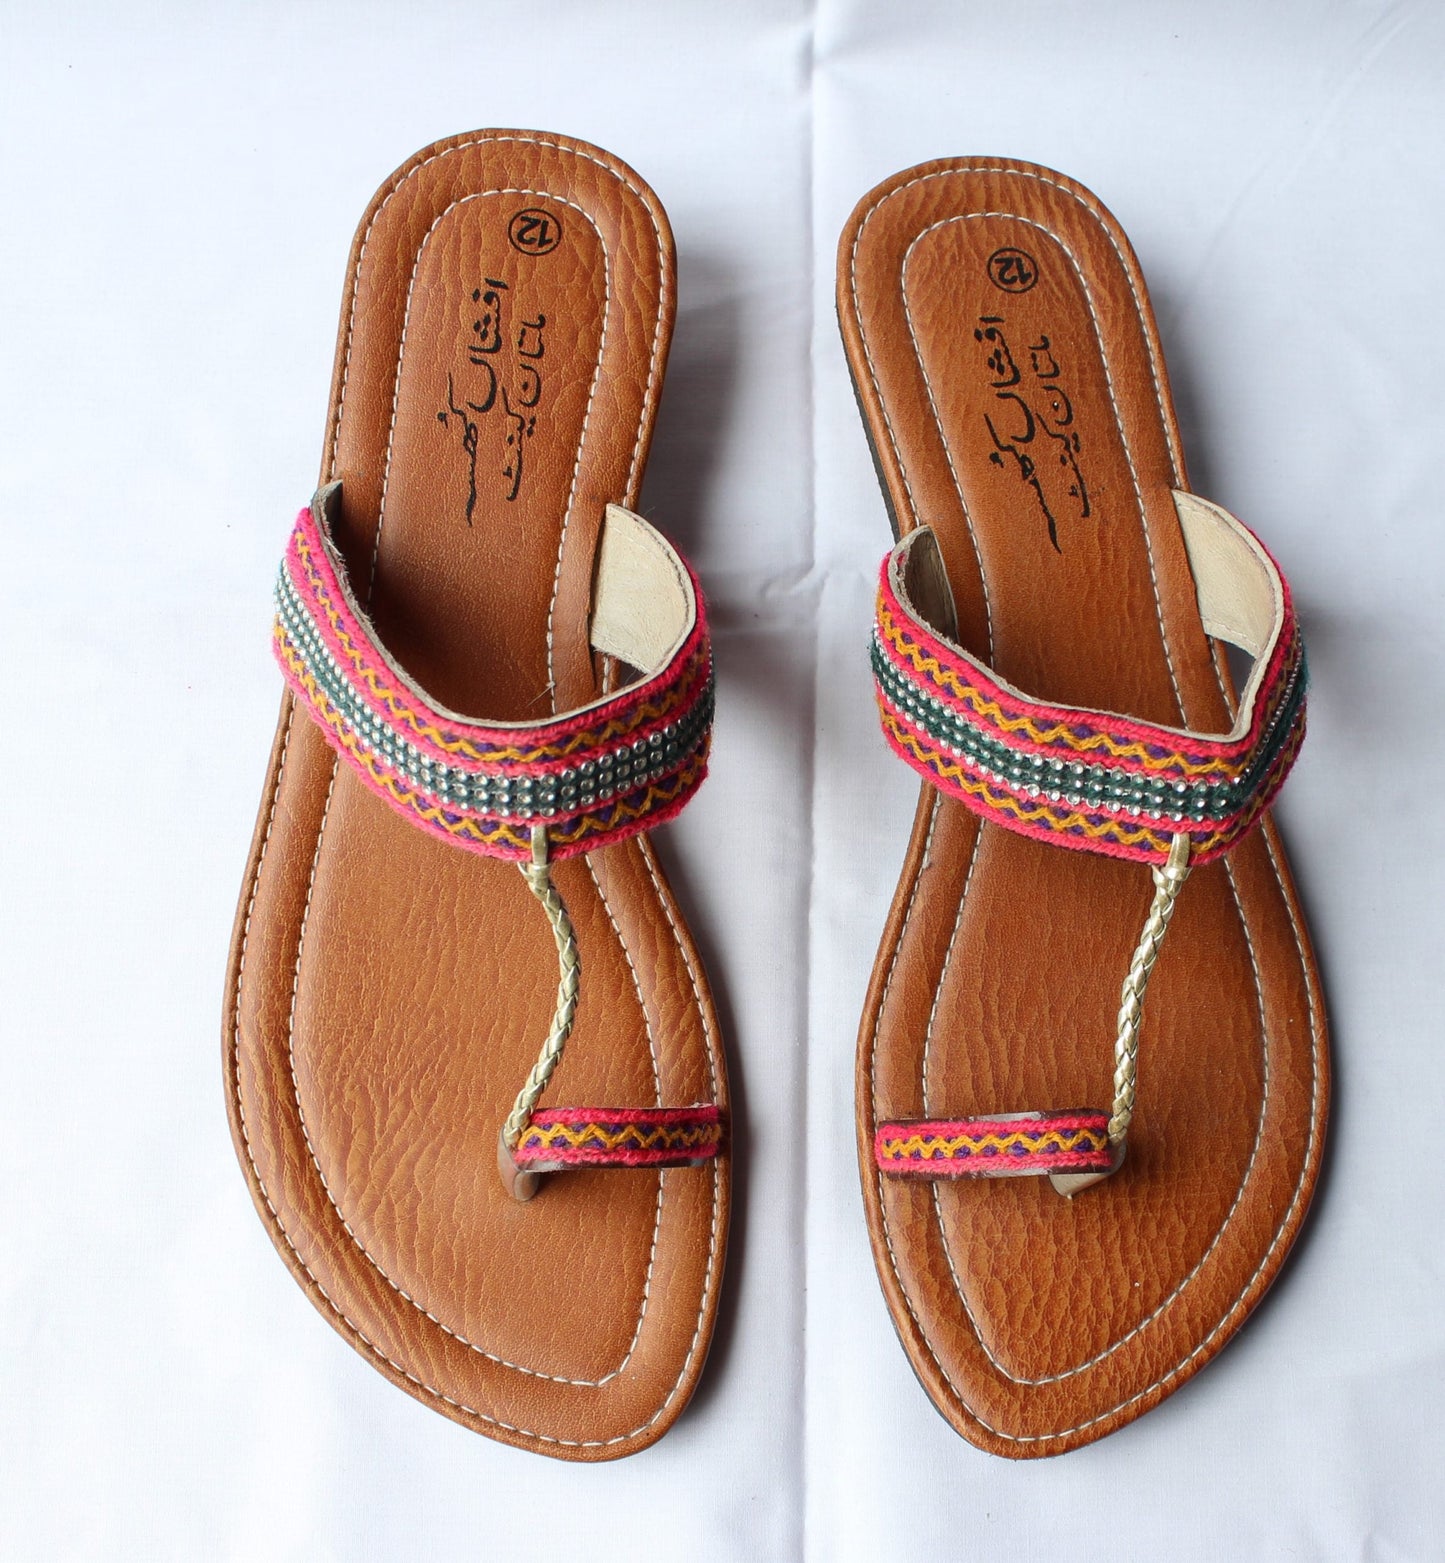 Safari Open Toed Heels Sandals